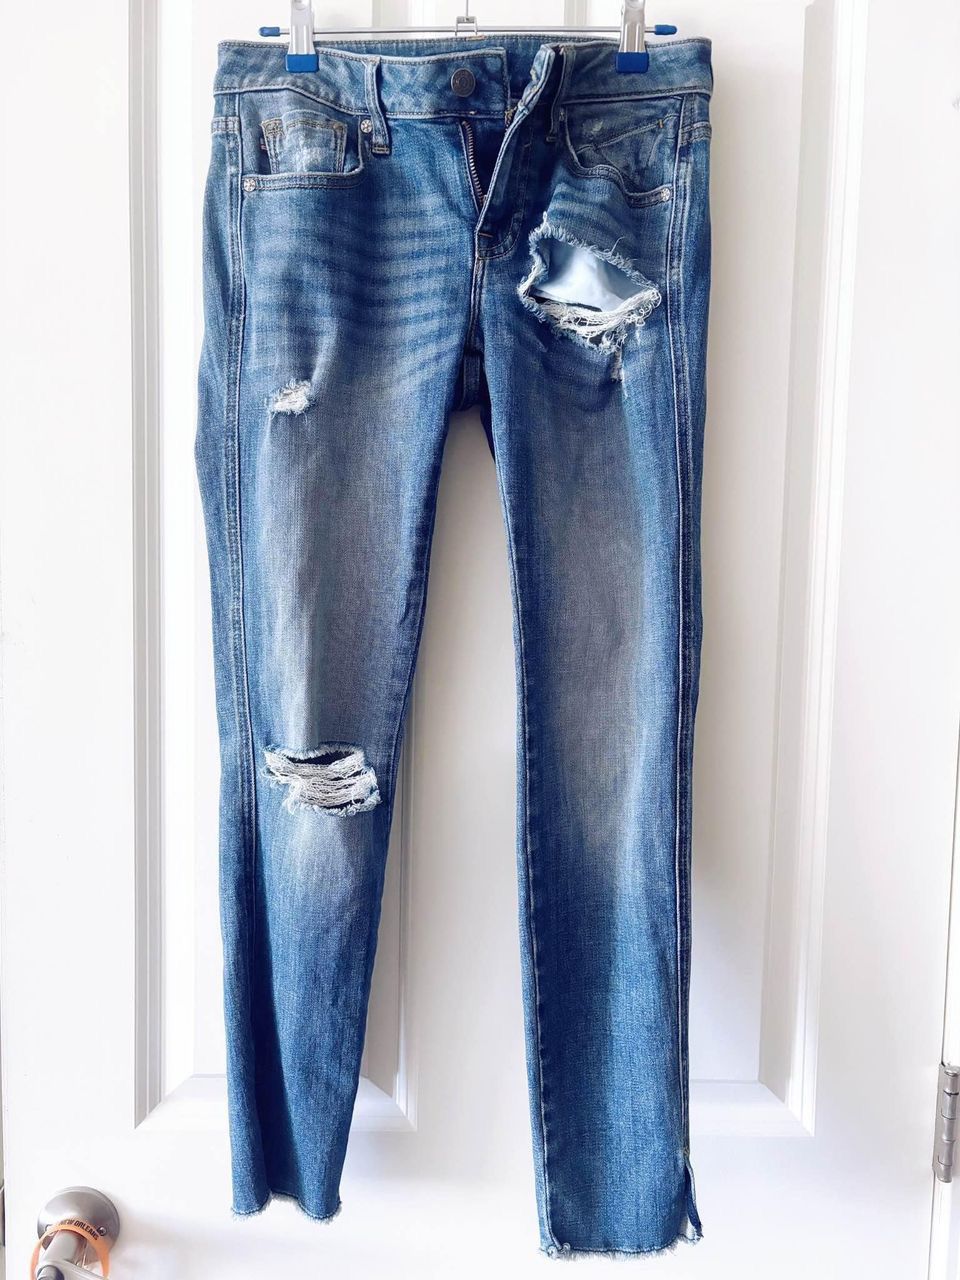 Jeans size 25